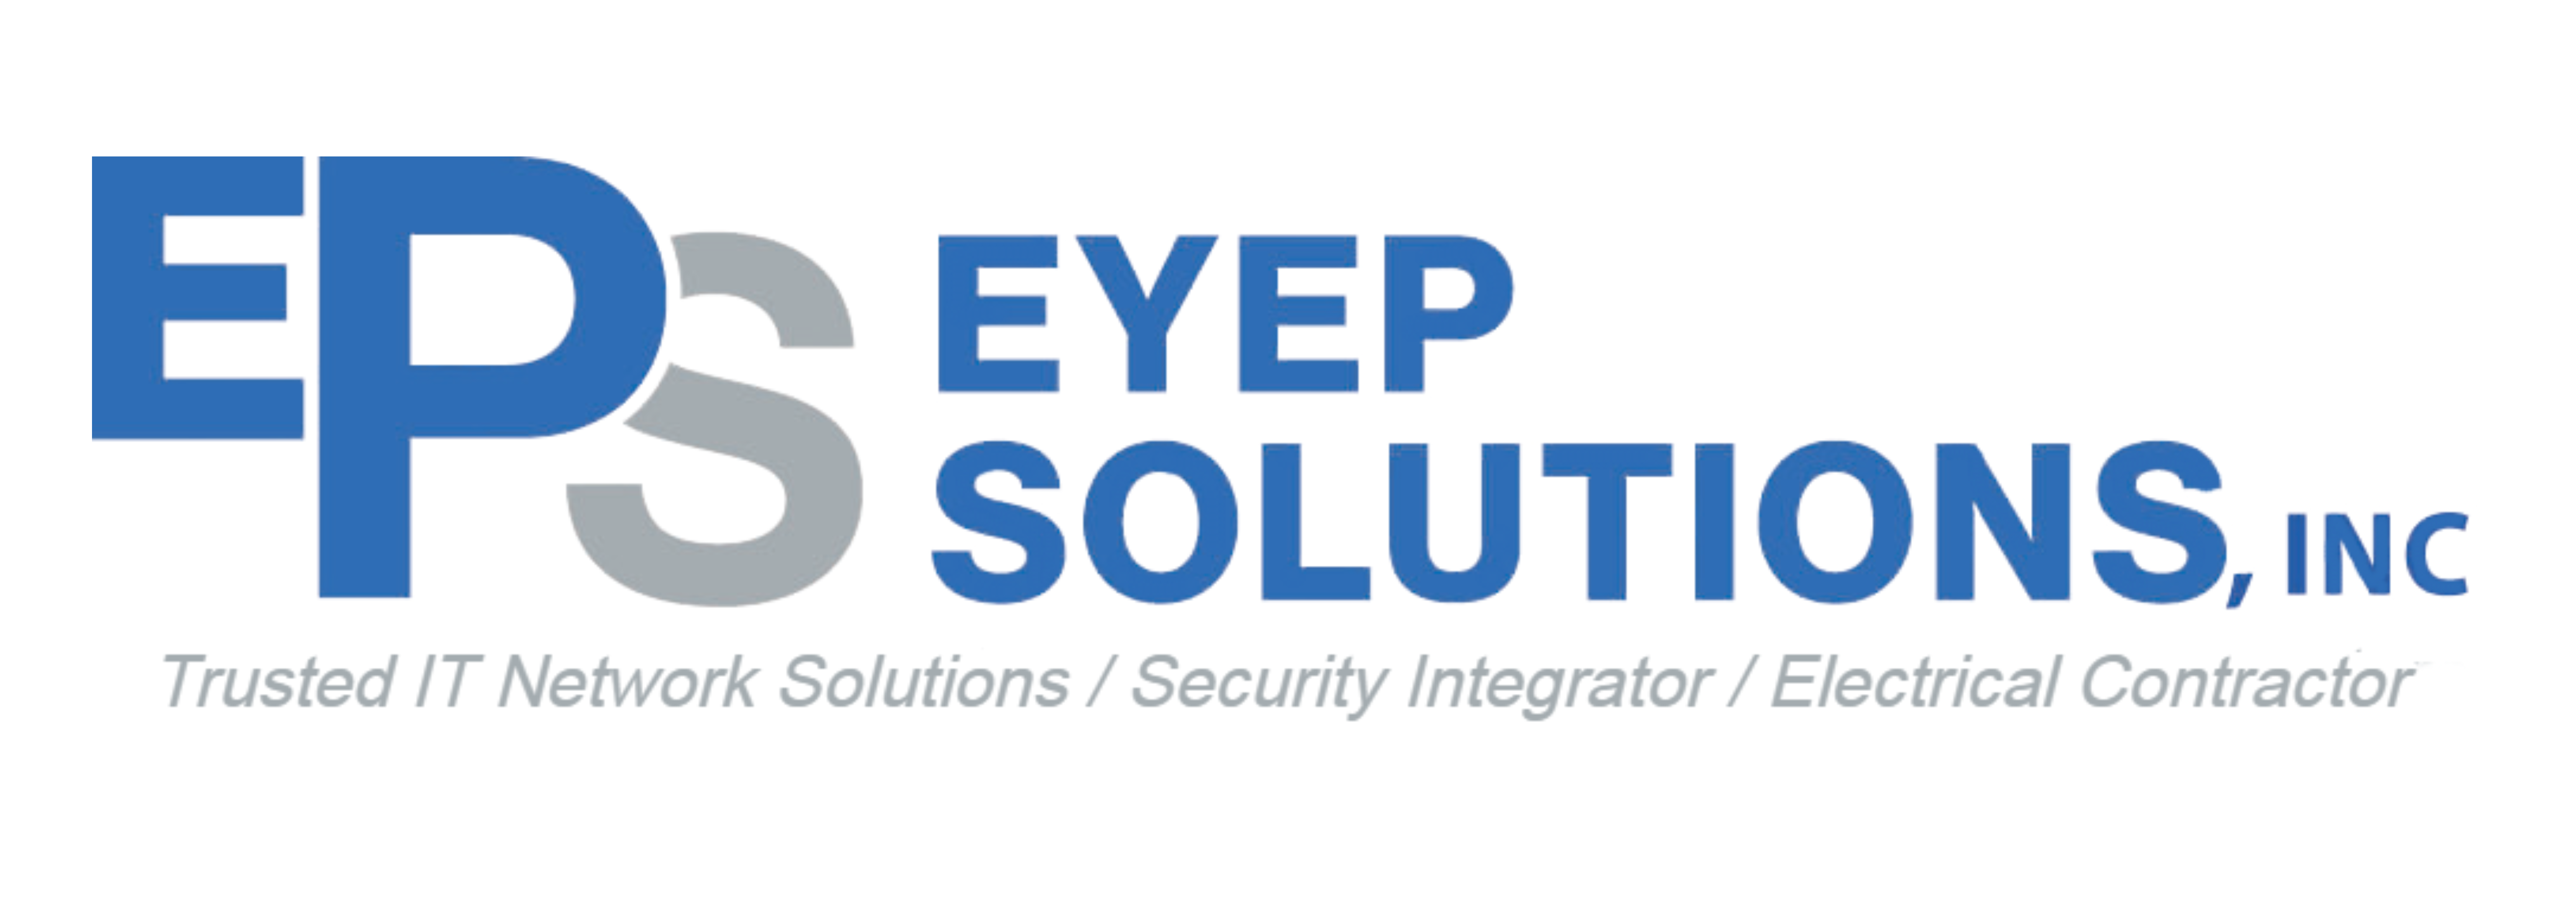 EYEP Solutions, Inc.